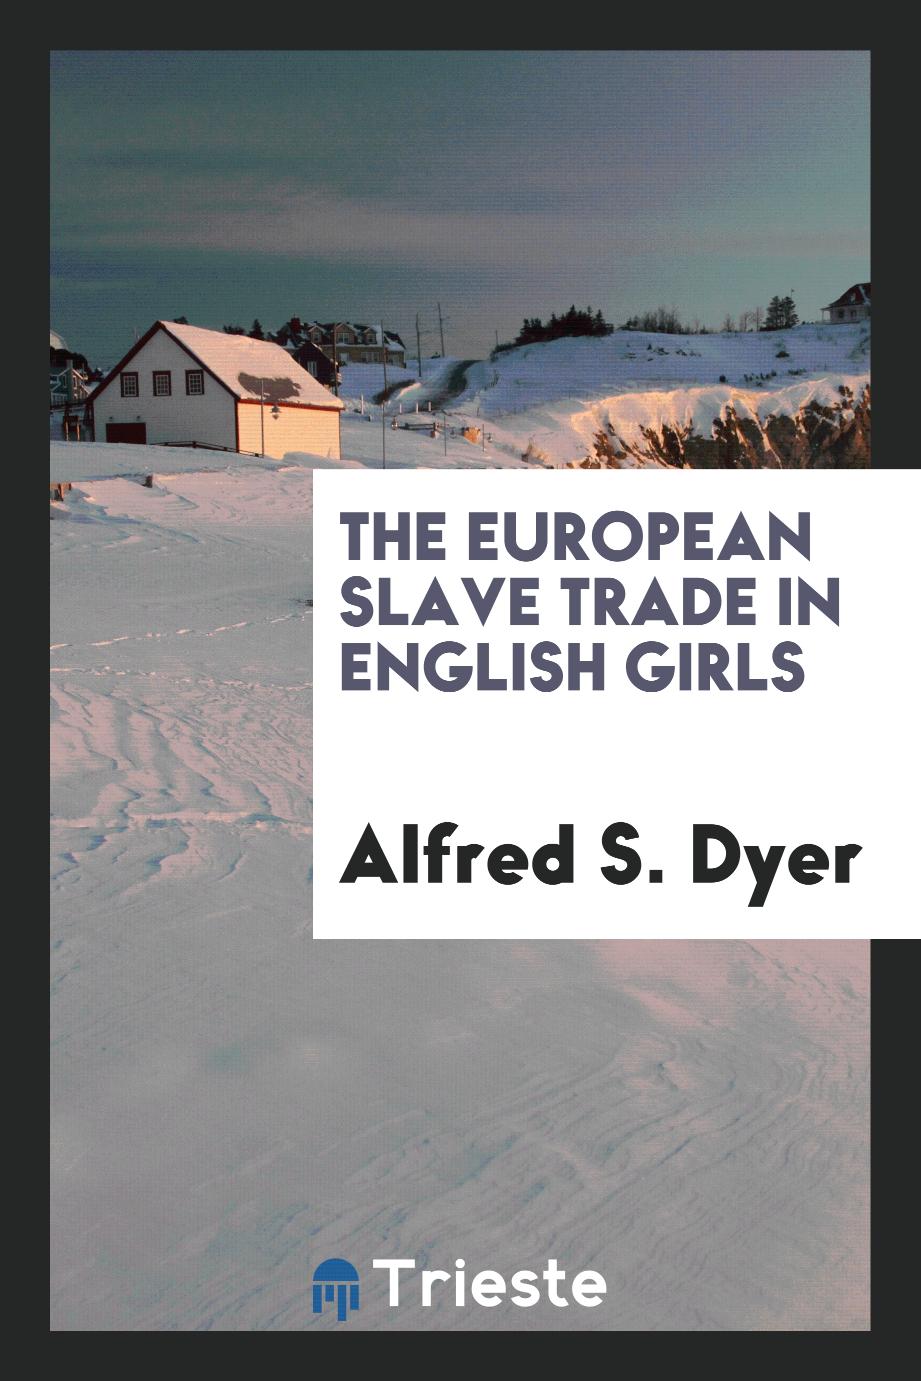 The European slave trade in English girls